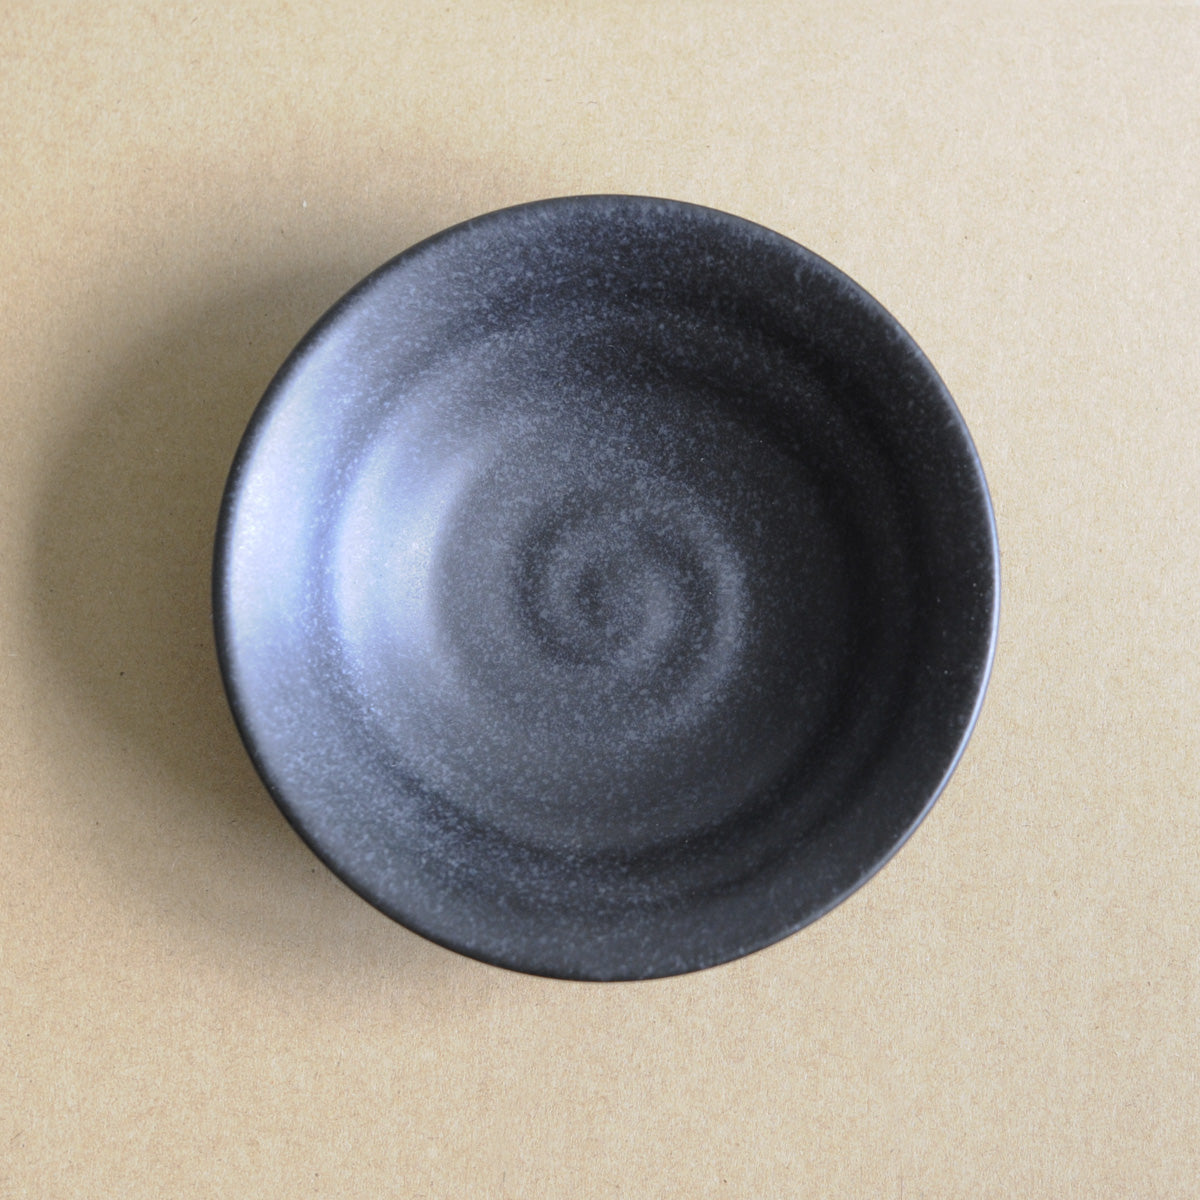 Kuriēto Round Rippuru Ceramic Cat Bowl, In Black | at Made Moggie